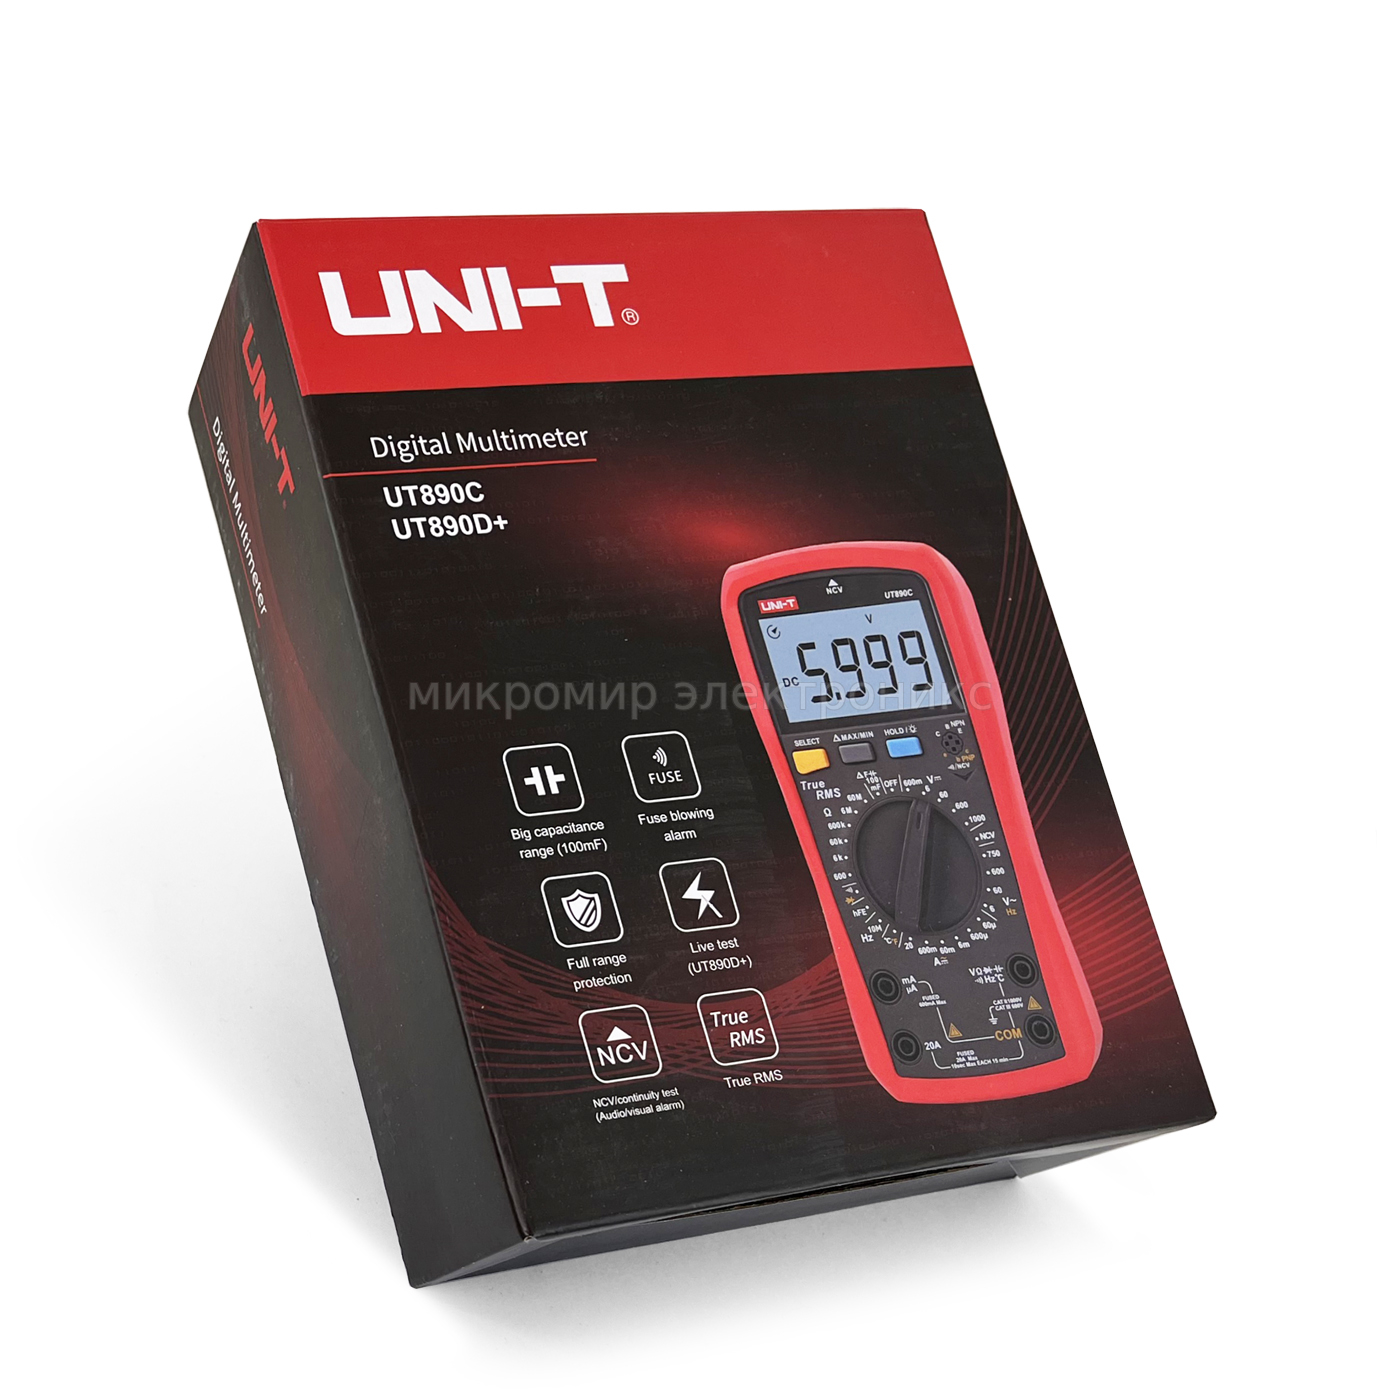 Uni t. Uni-t ut890d+. Мультиметр Uni-t ut890d+. Uni-t 890d. Ut890d цифровой мультиметр.